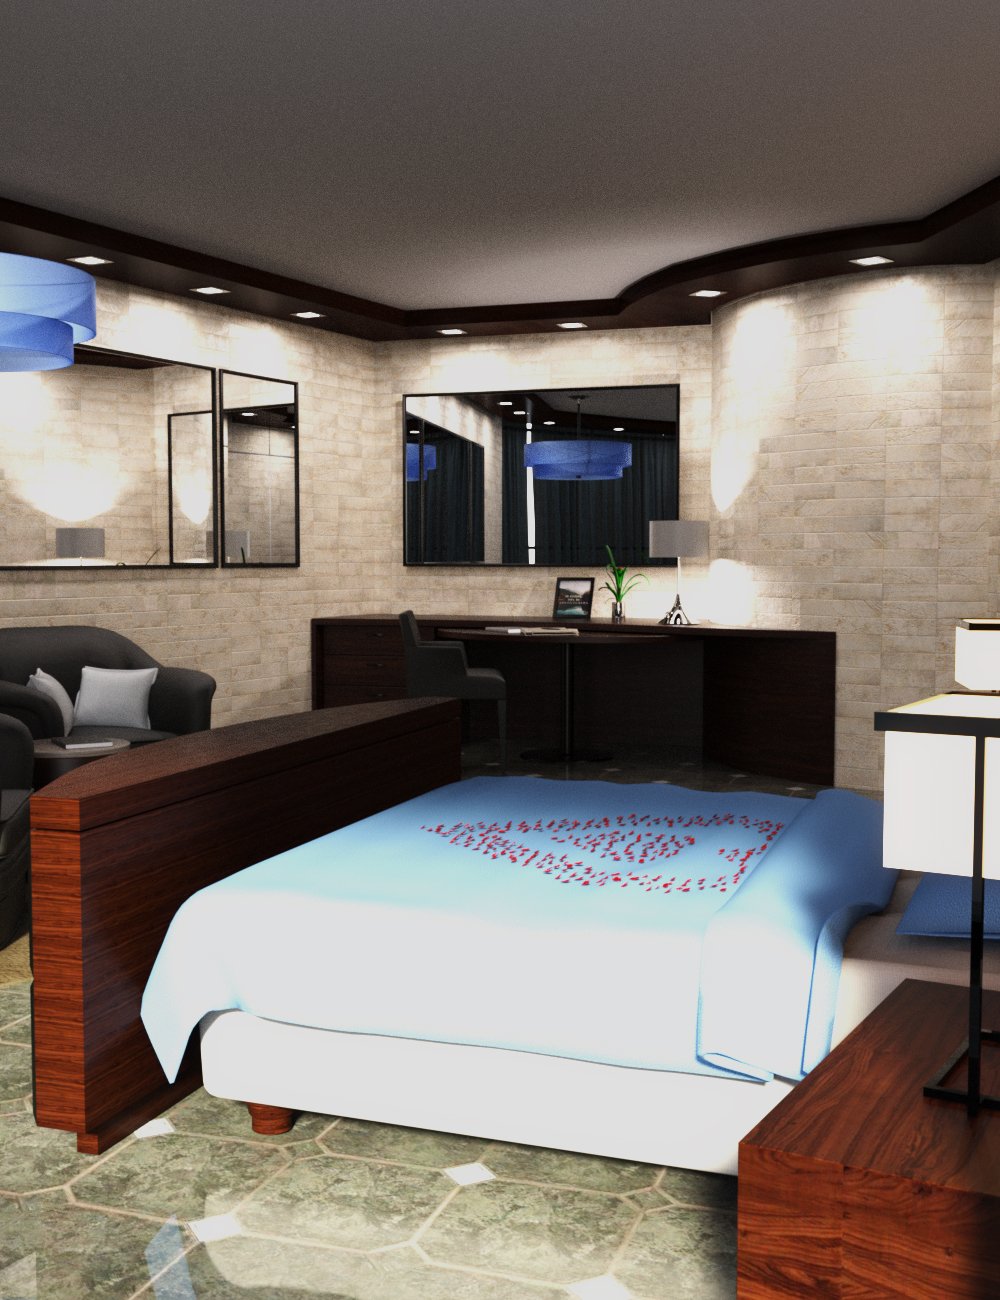 Romantic Hotel Room by: Tesla3dCorp, 3D Models by Daz 3D